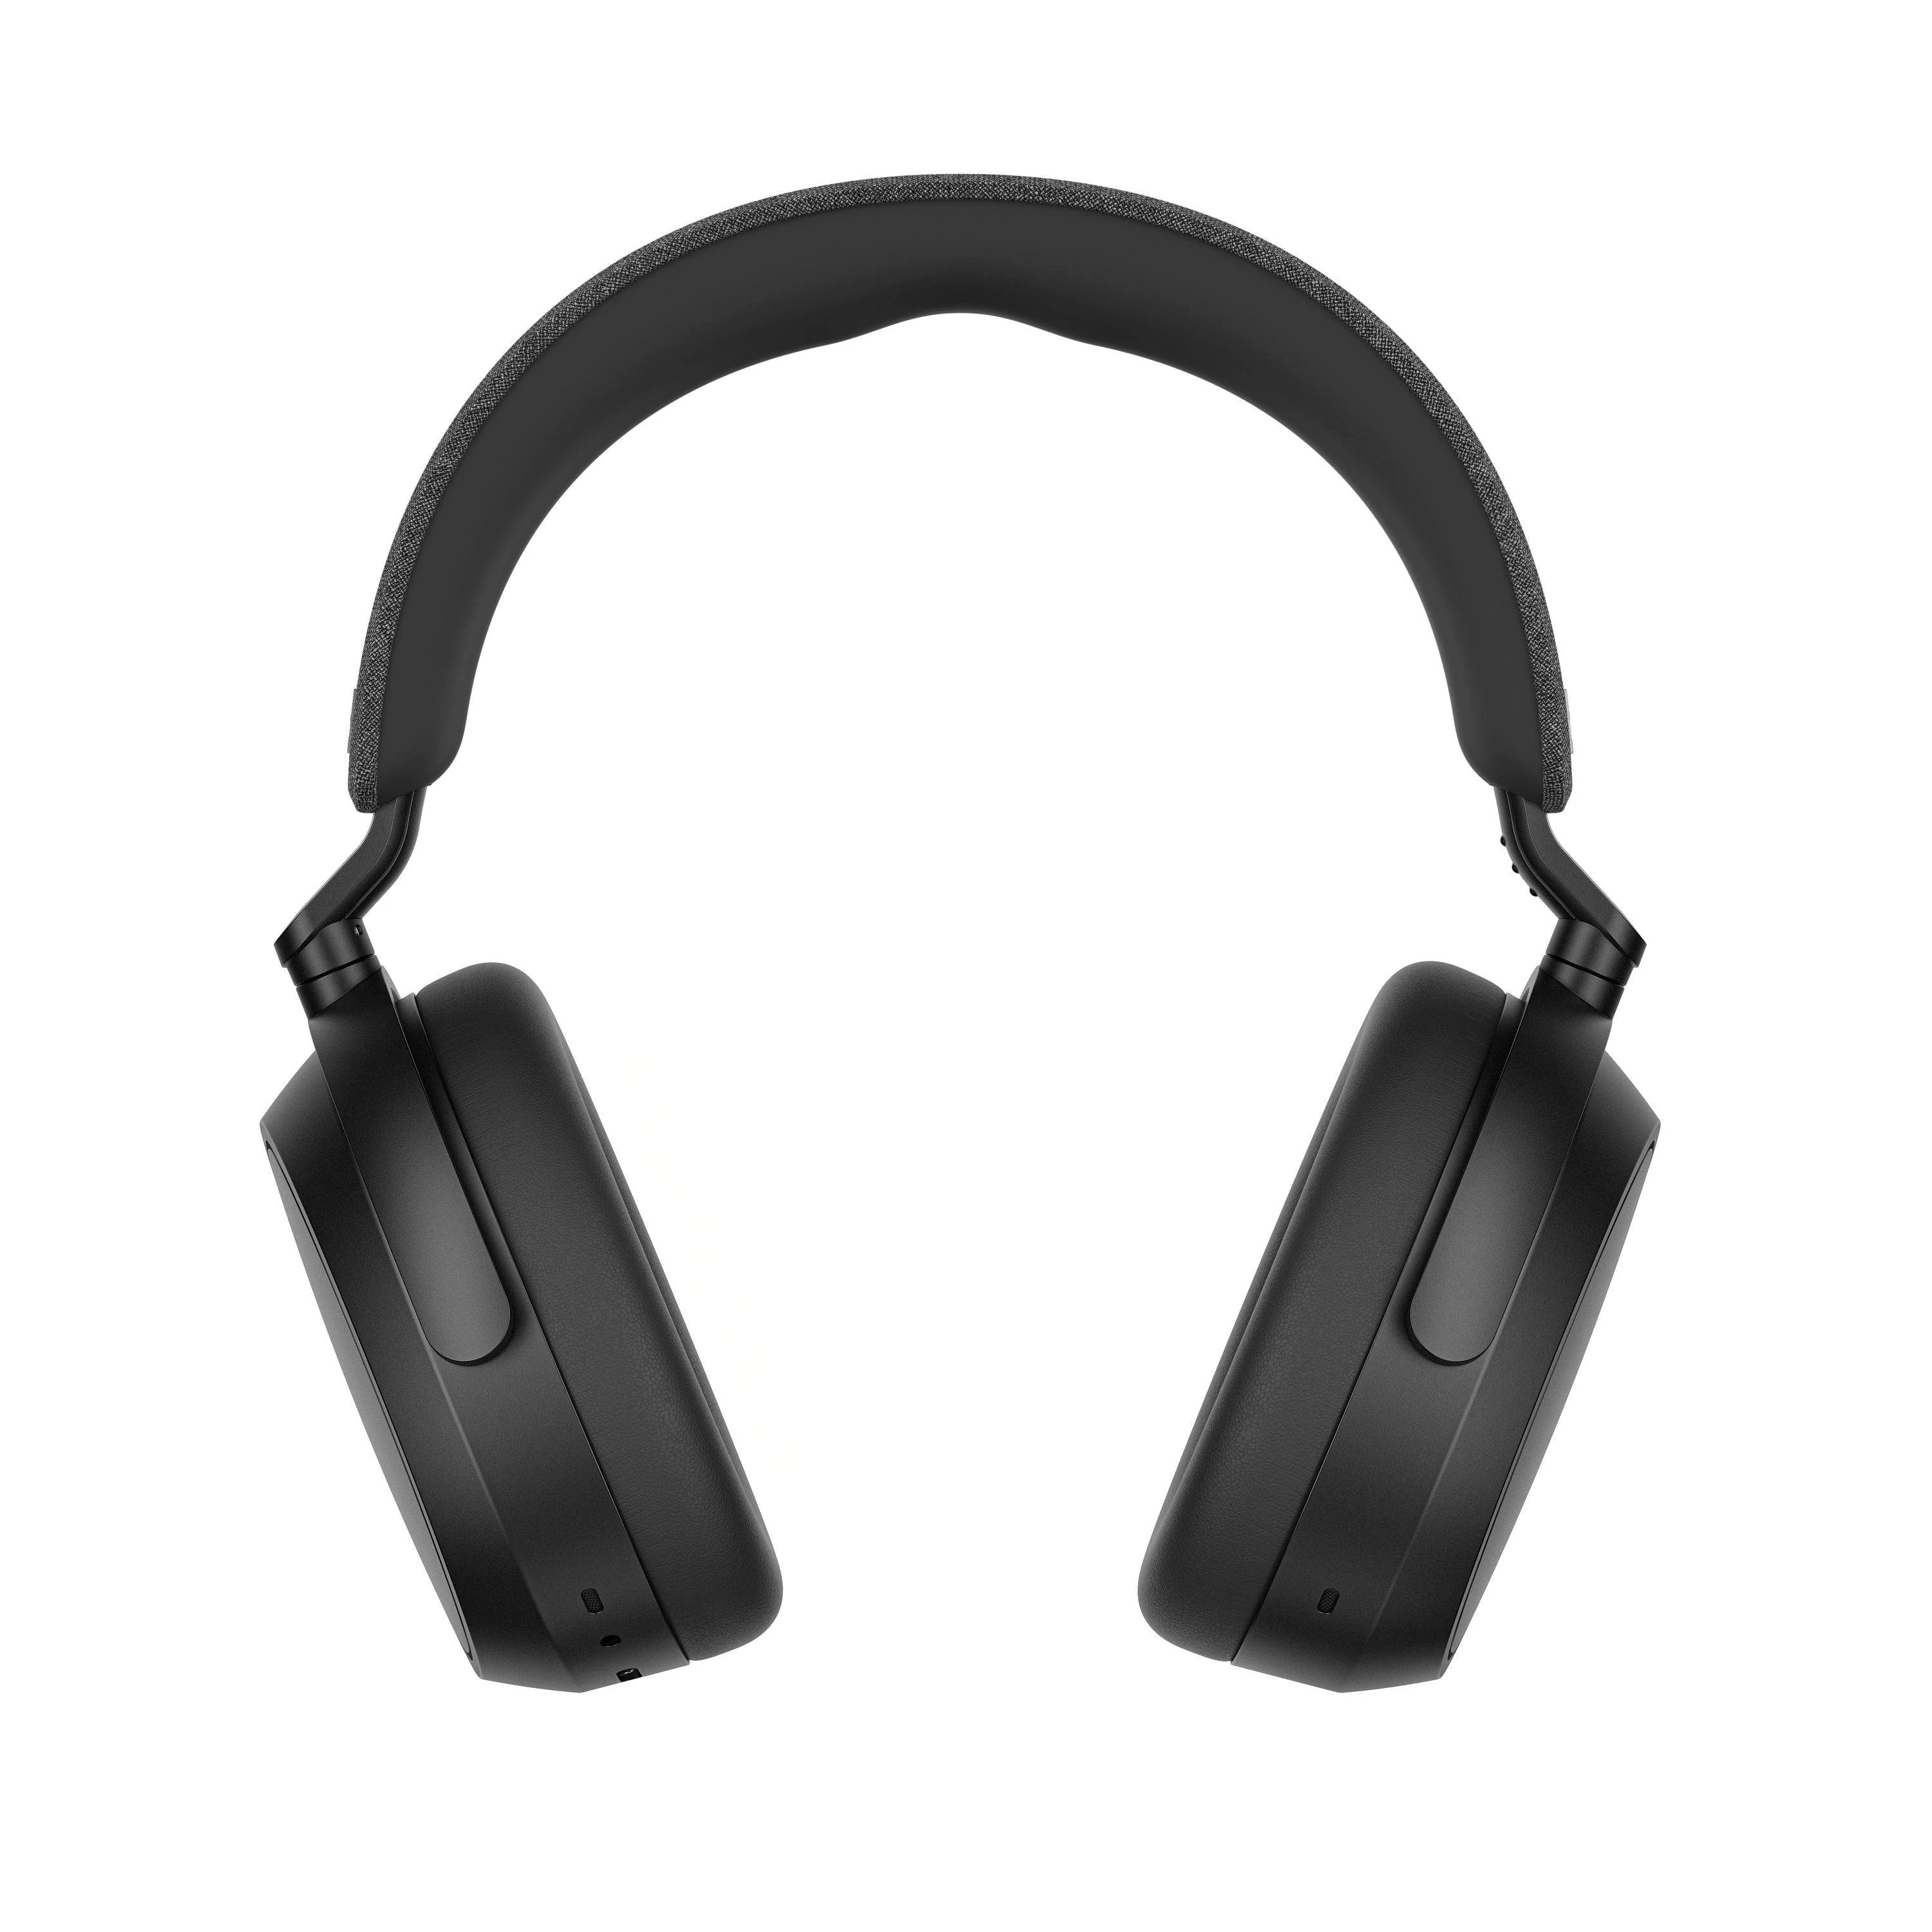 Sennheiser's new flagship Momentum 4 wireless ANC headphones now